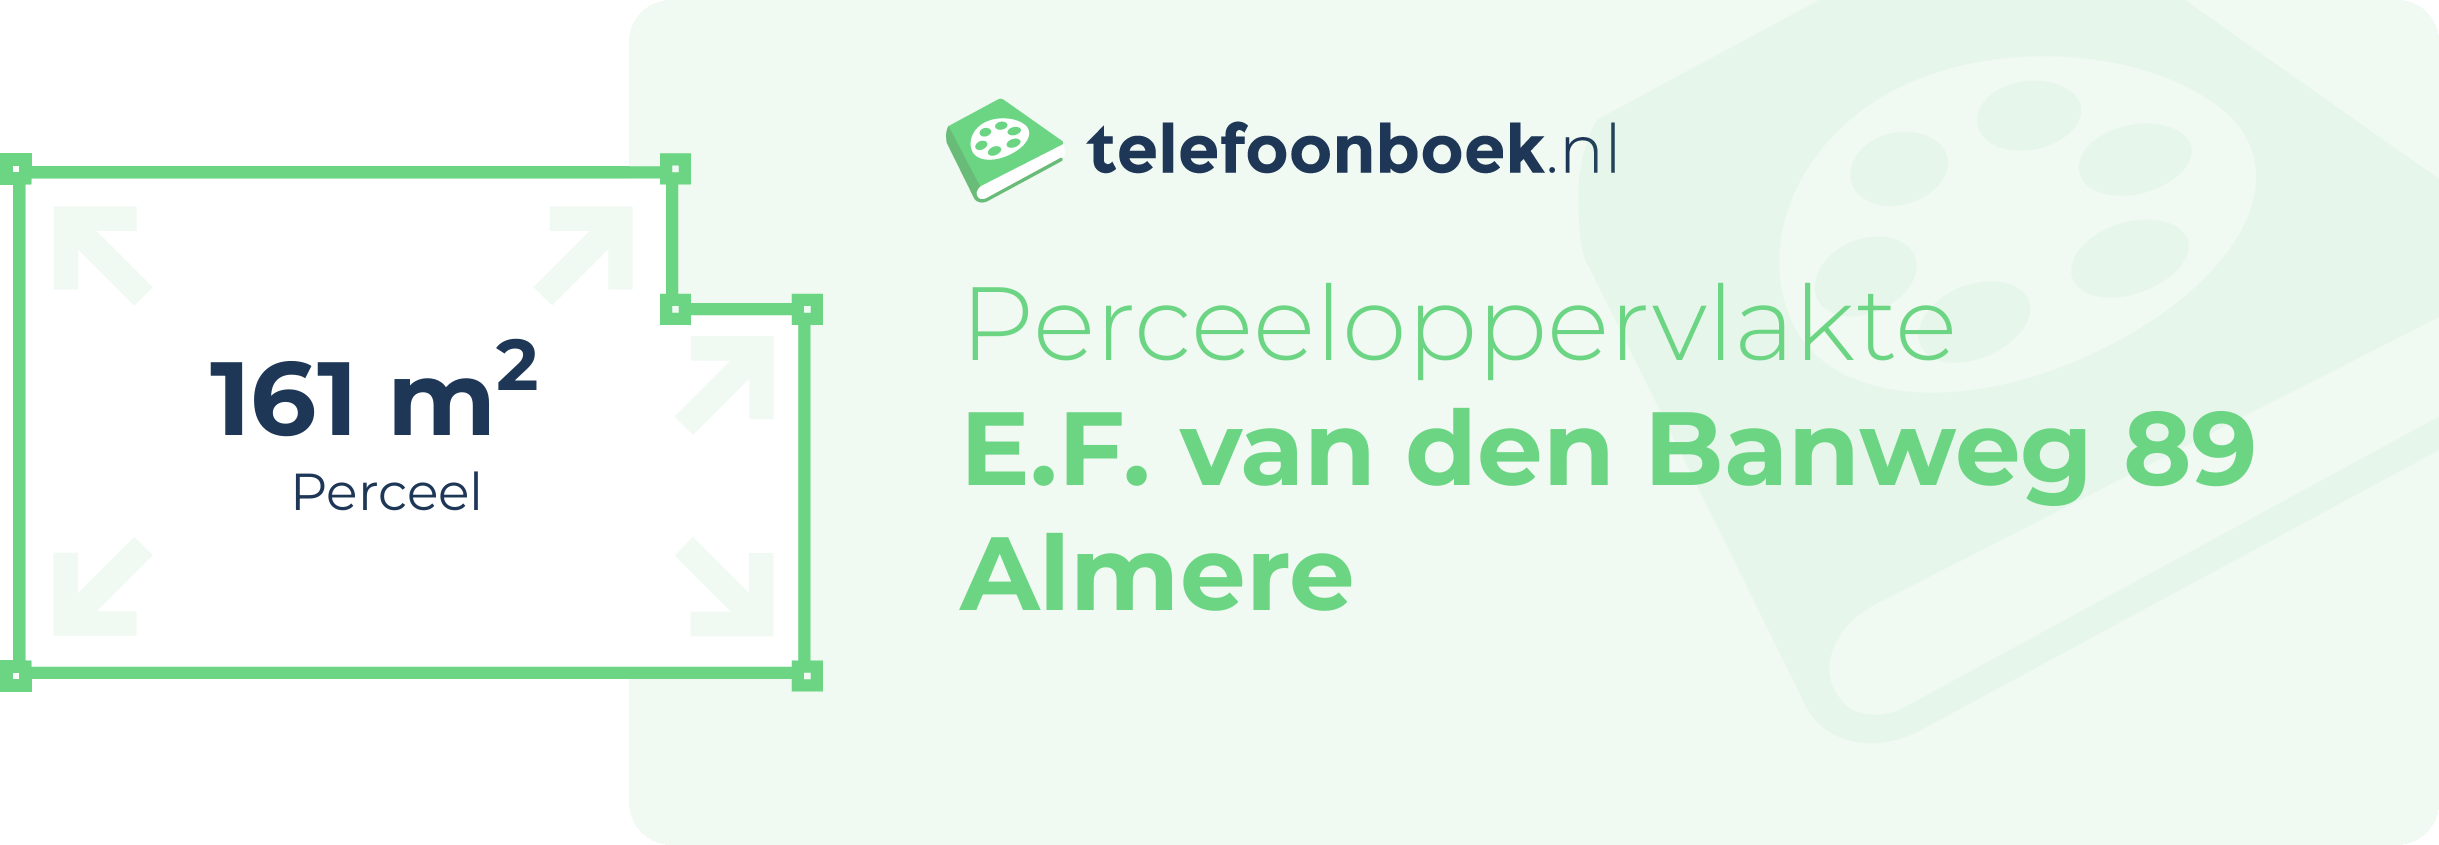 Perceeloppervlakte E.F. Van Den Banweg 89 Almere